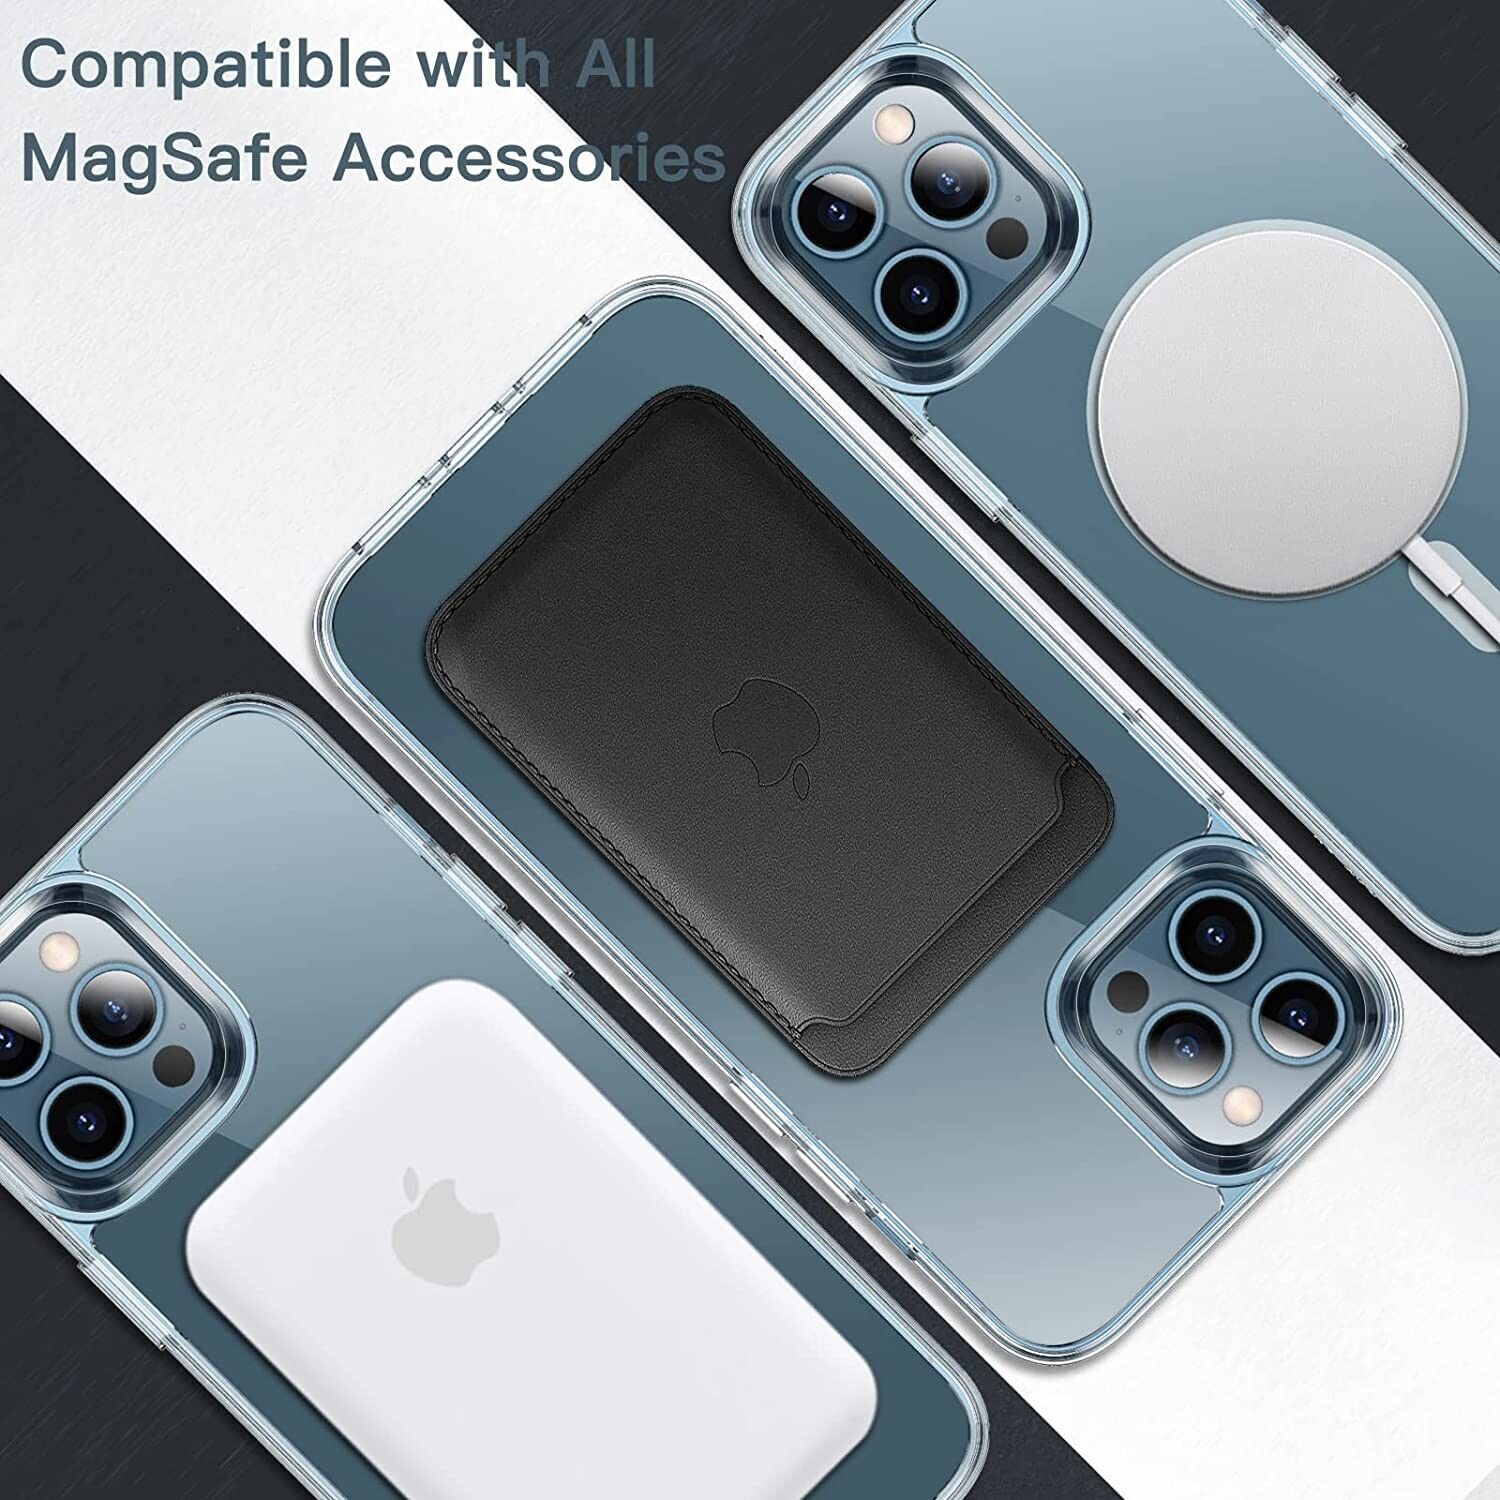 Funda transparente iPhone 12 Pro Max compatible con Magsafe 